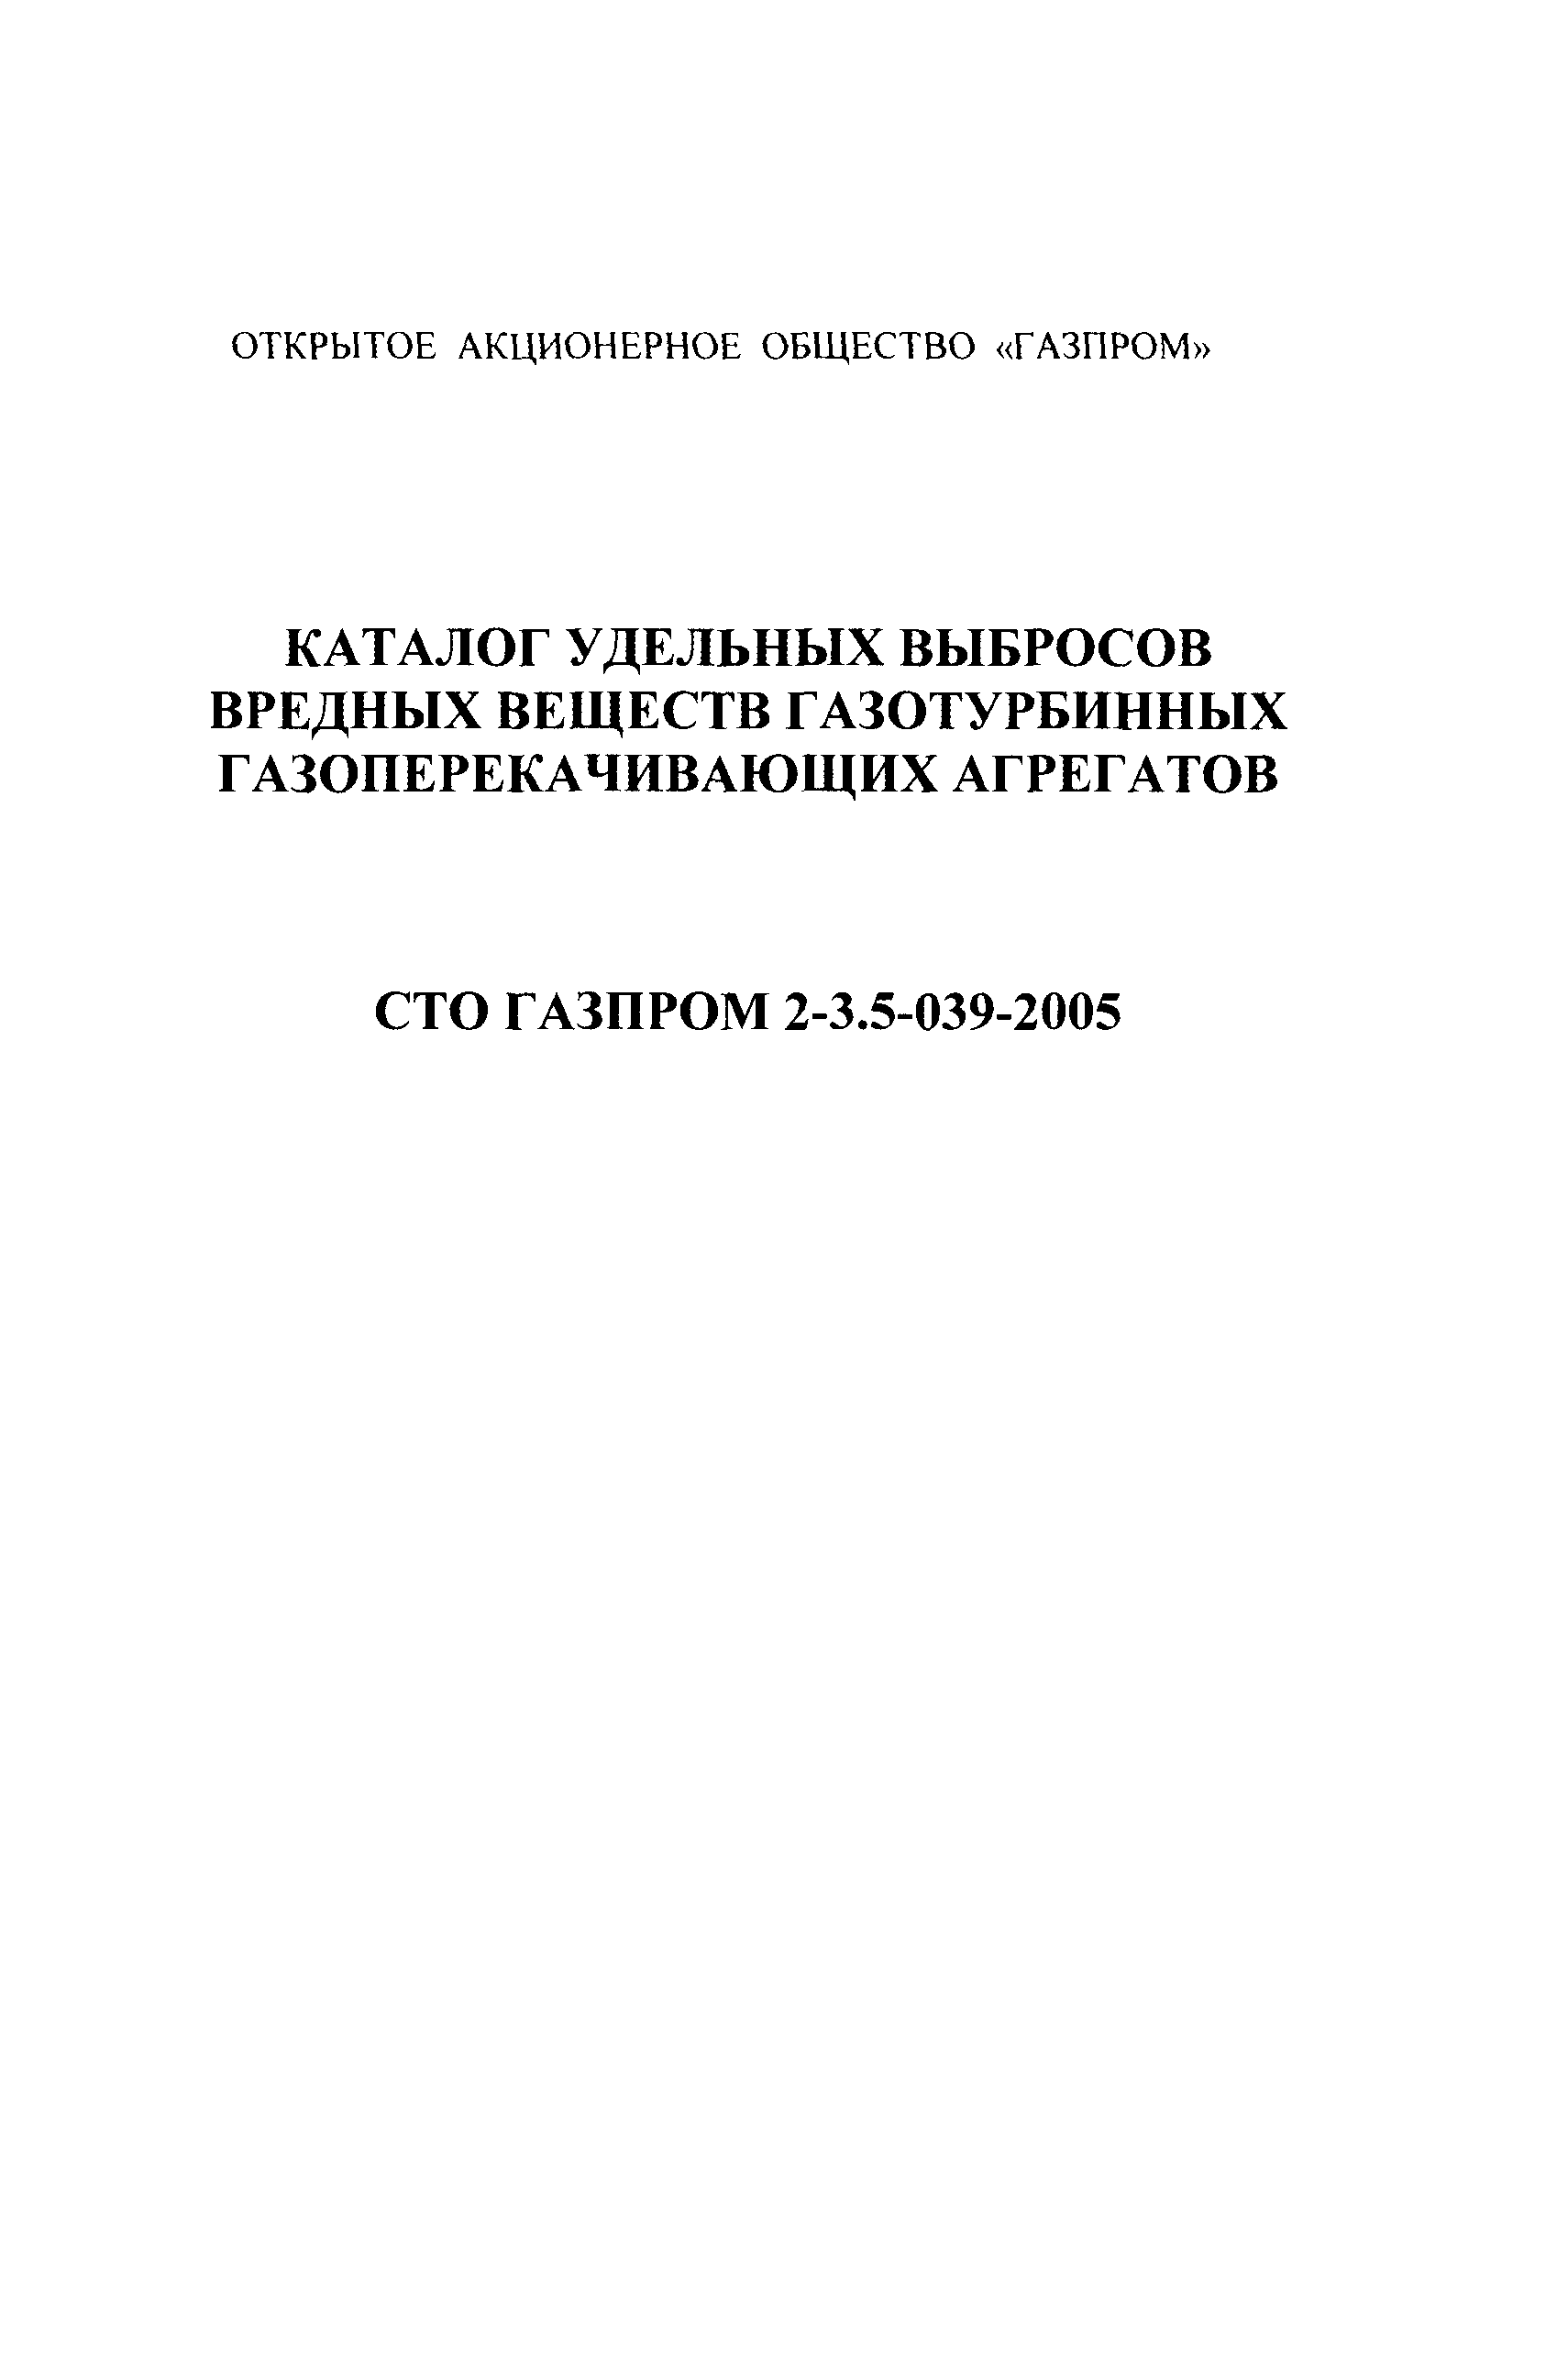 СТО Газпром 2-3.5-039-2005